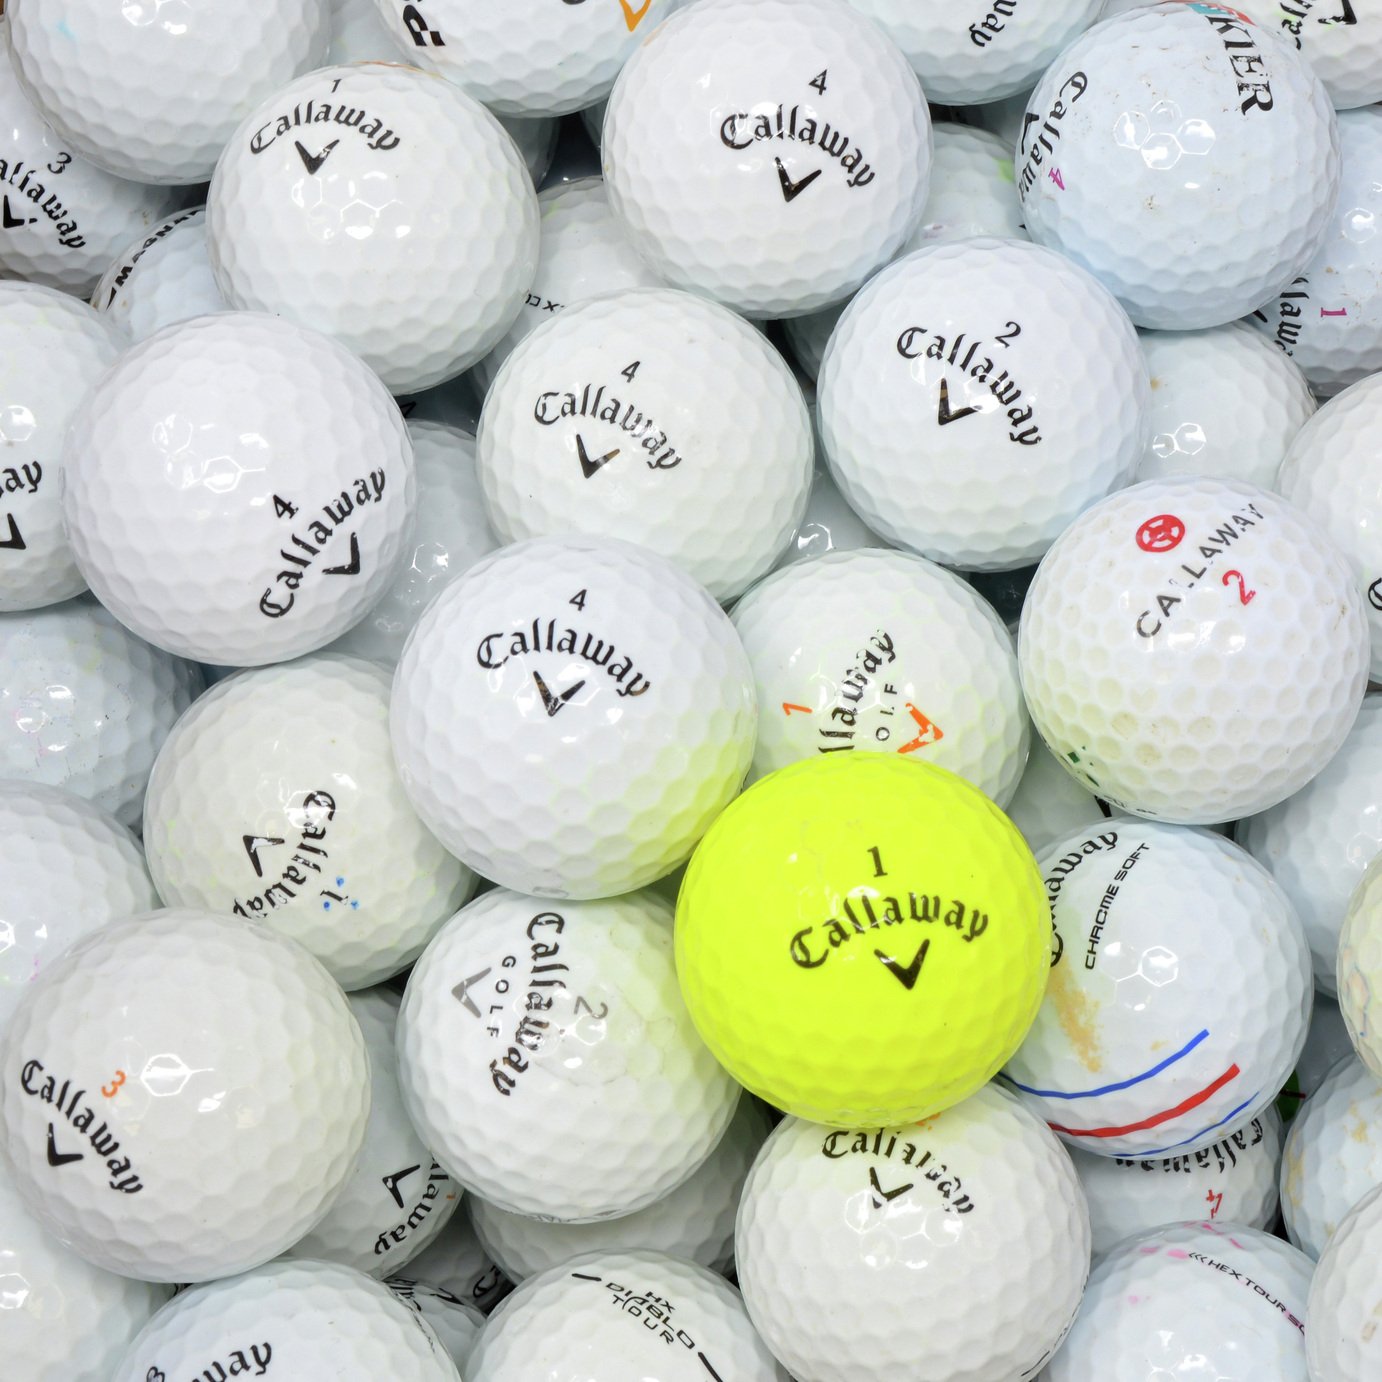 Callaway Lake Golf Balls in a Box - Pack of 100